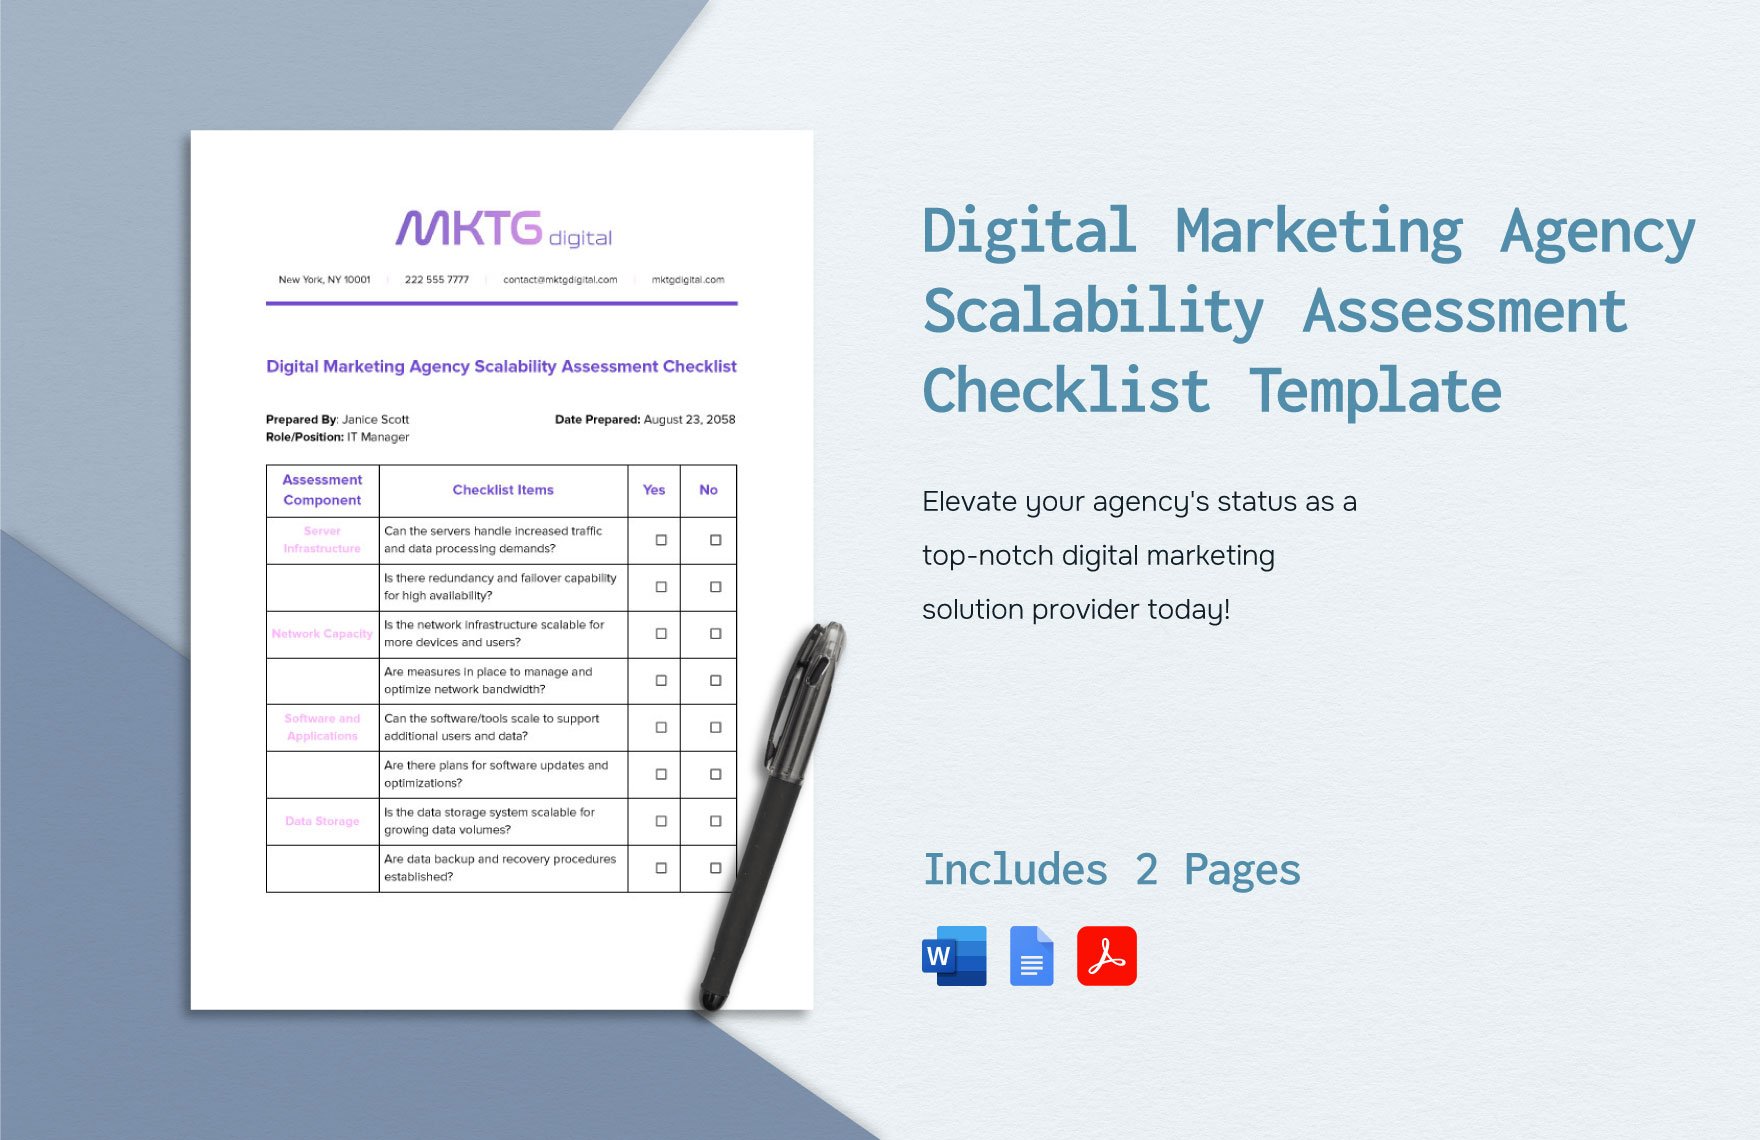 Digital Marketing Agency Scalability Assessment Checklist Template